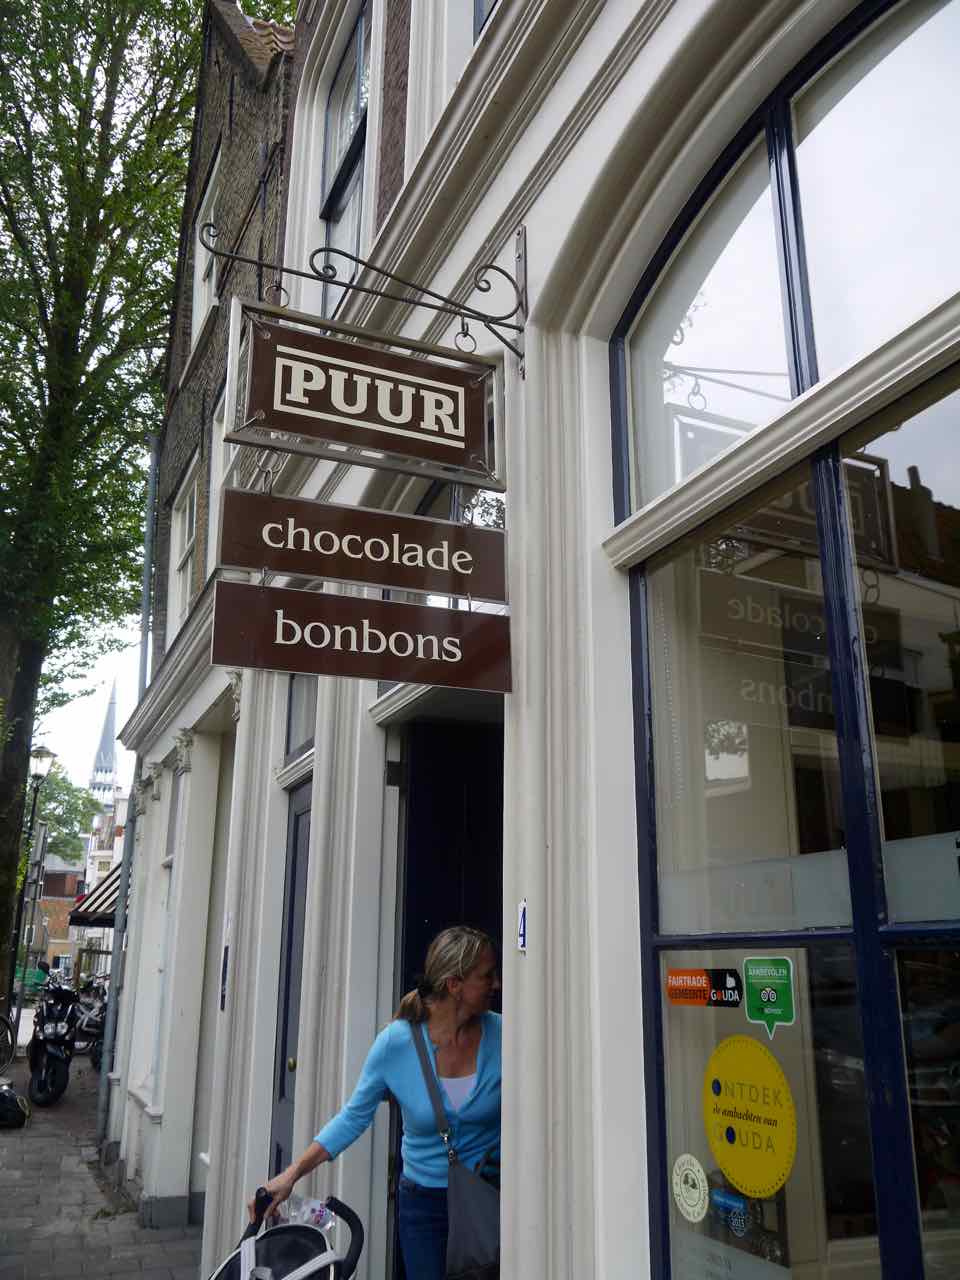 The Netherlands- Arnhem, Amersfoort, Gouda, Delft, Veere | Perchance to Cook, www.perchancetocook.com